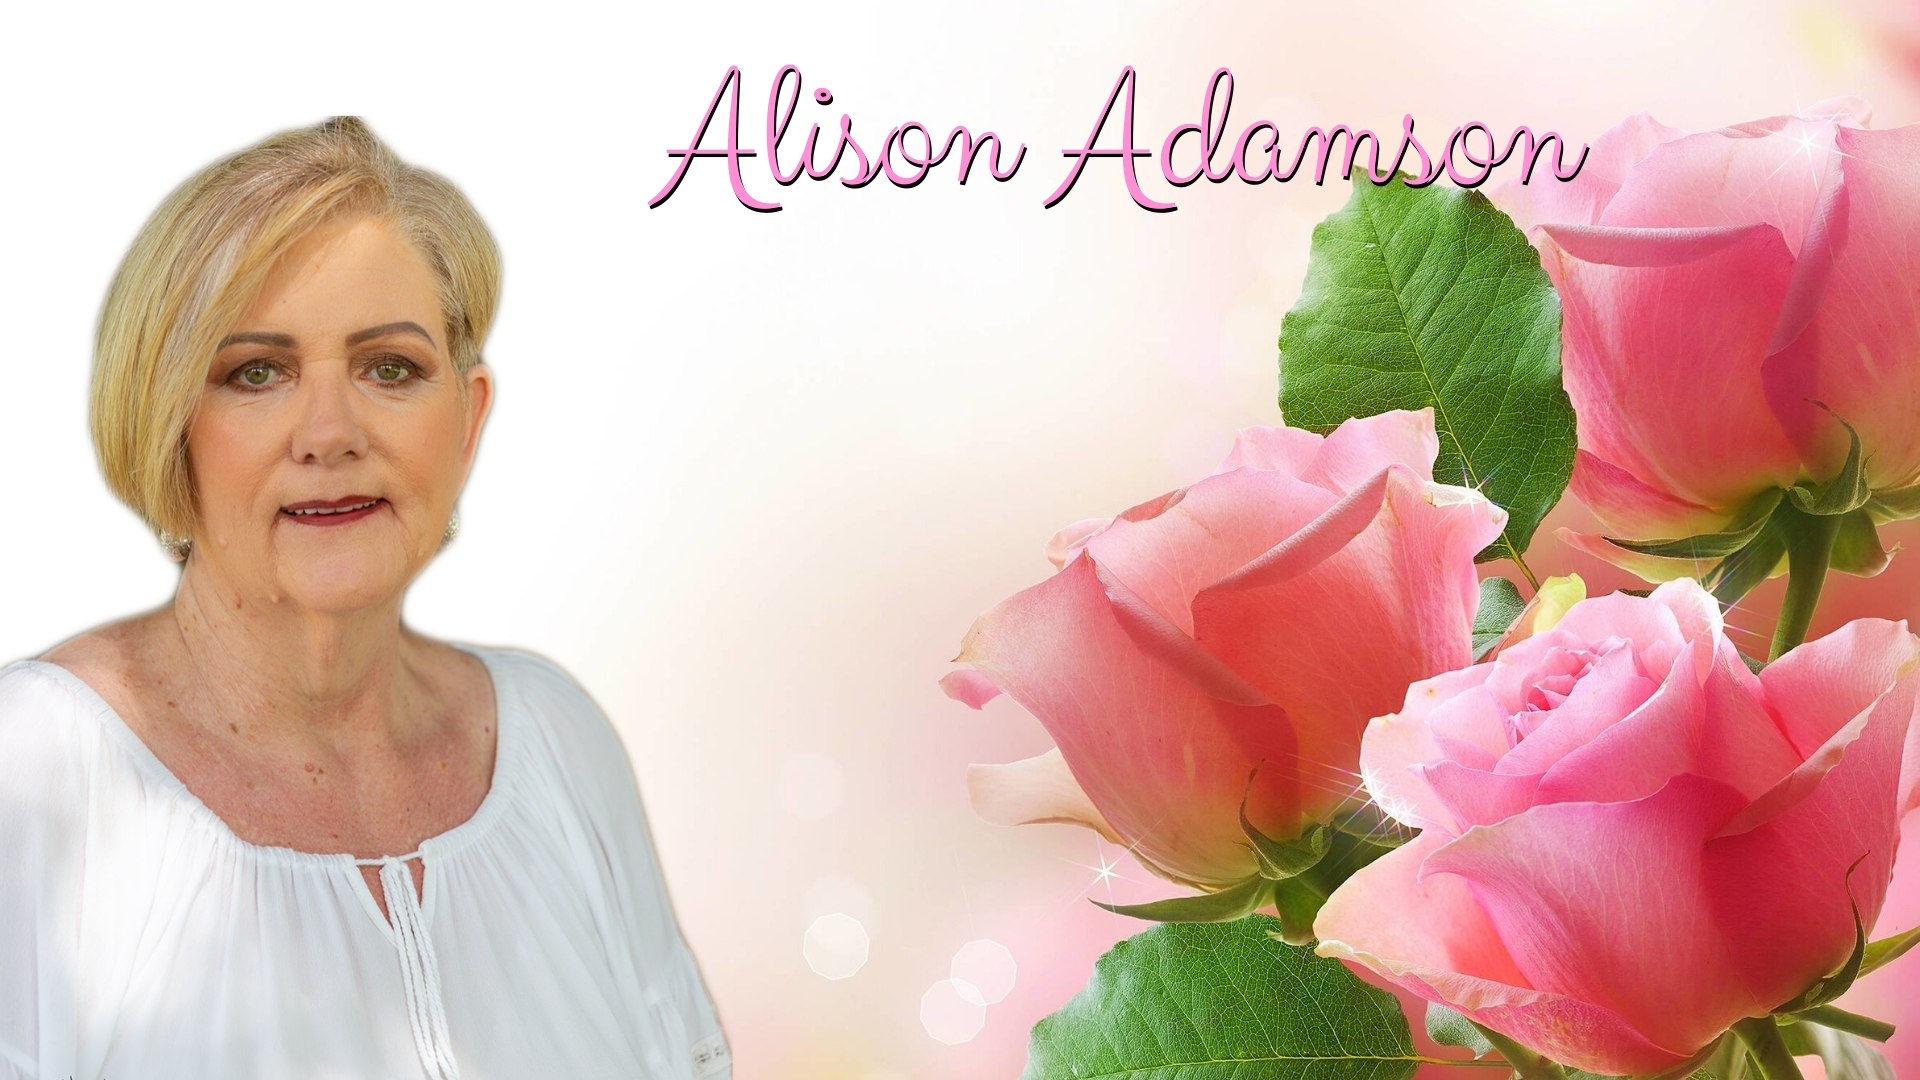 Alison Adamson